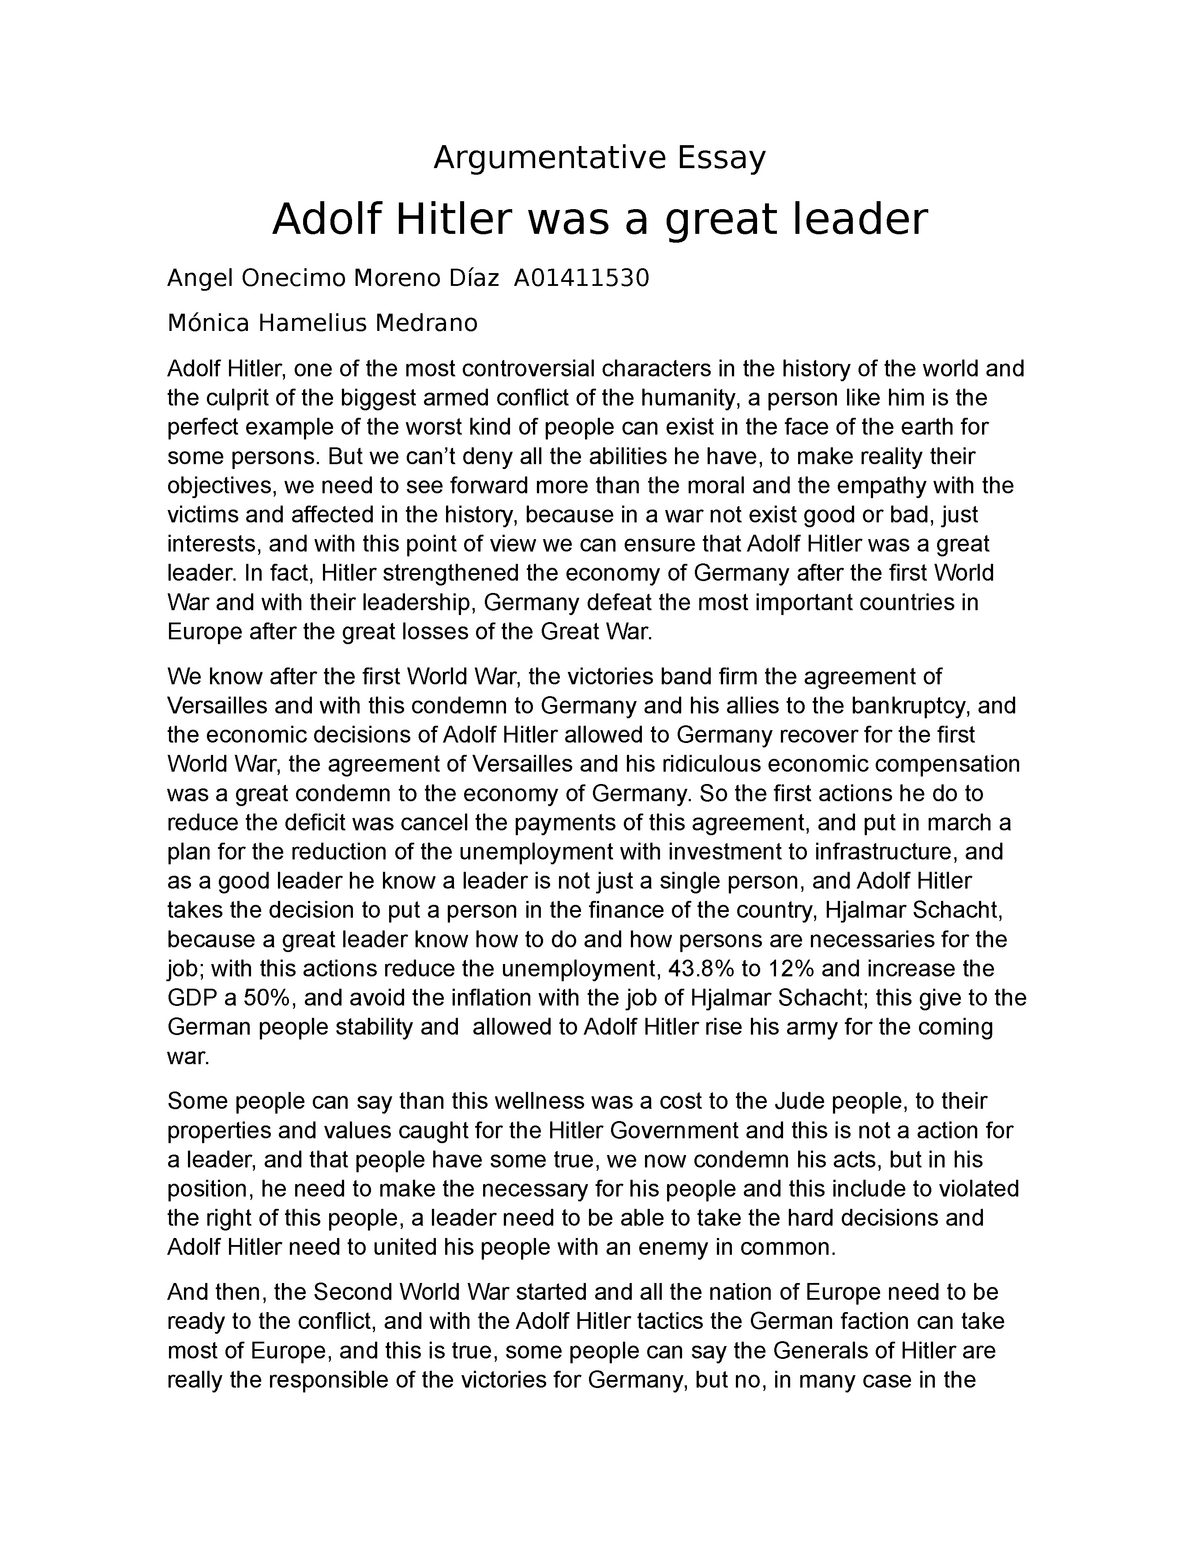 an essay about adolf hitler